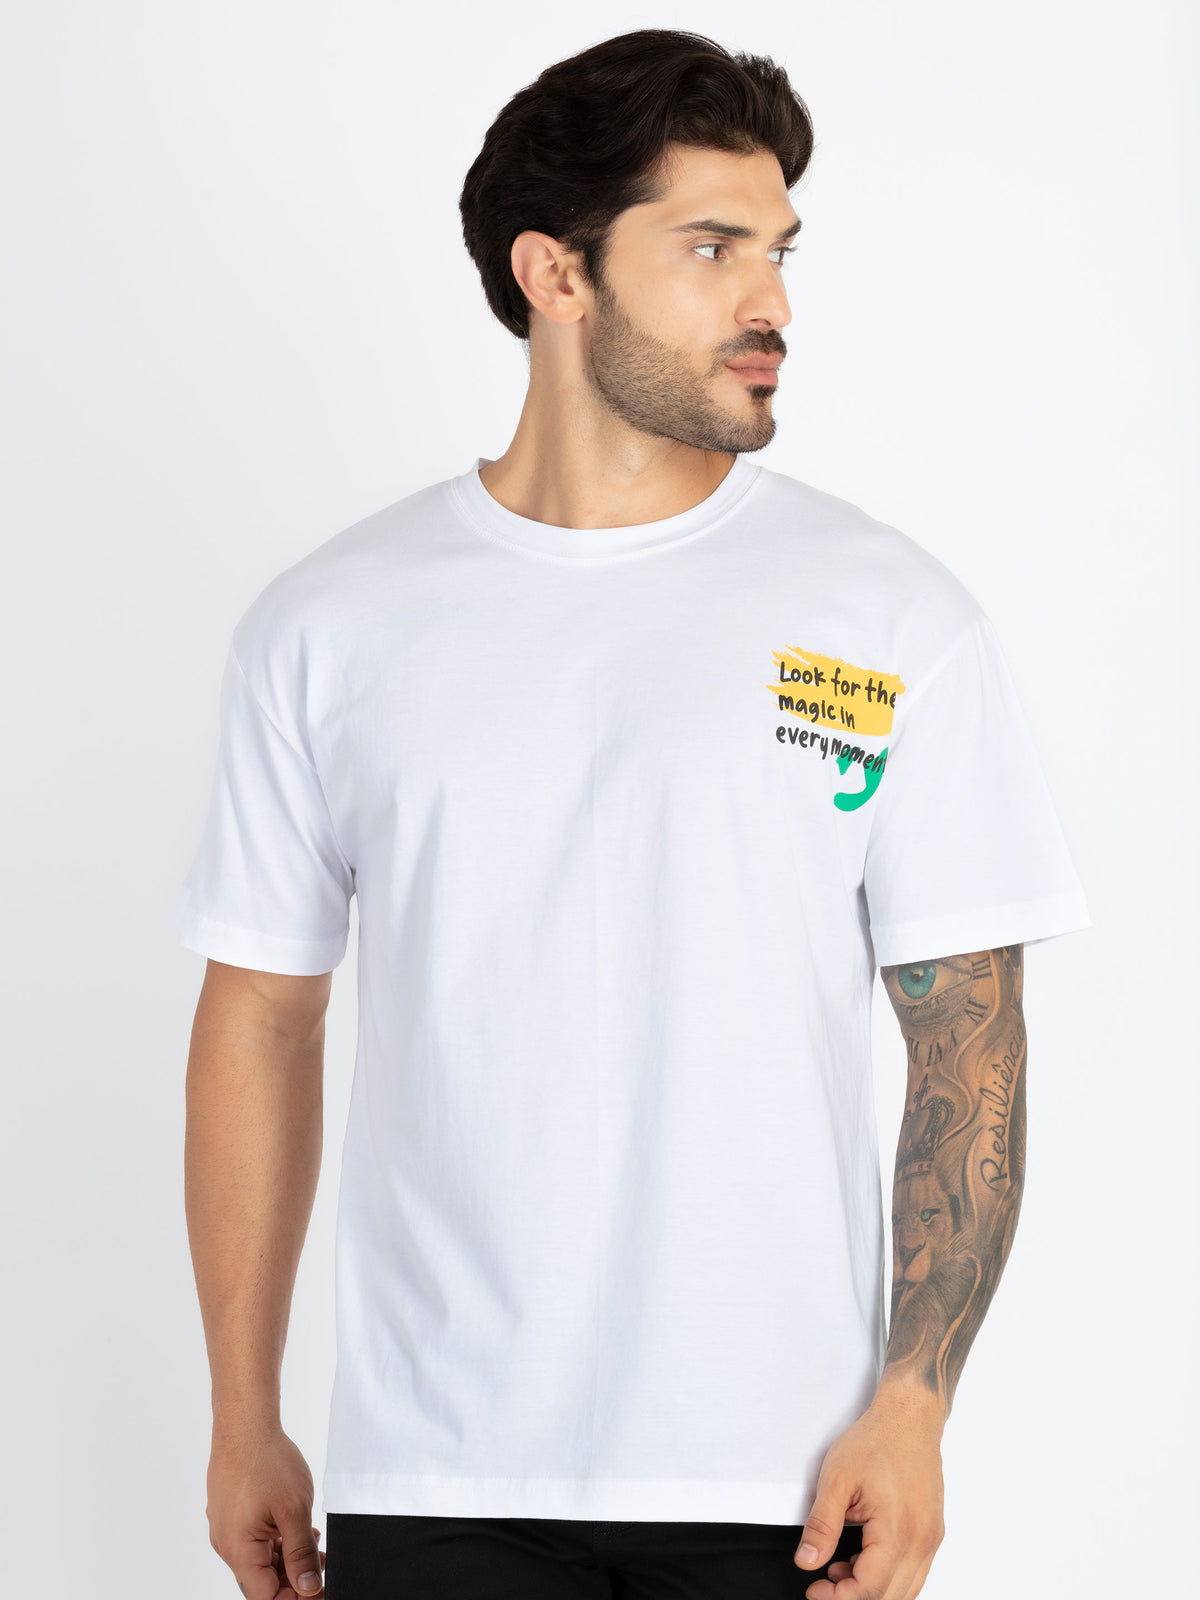 Status Quo |Men's Oversized T-shirt - S, M, L, XL, XXL